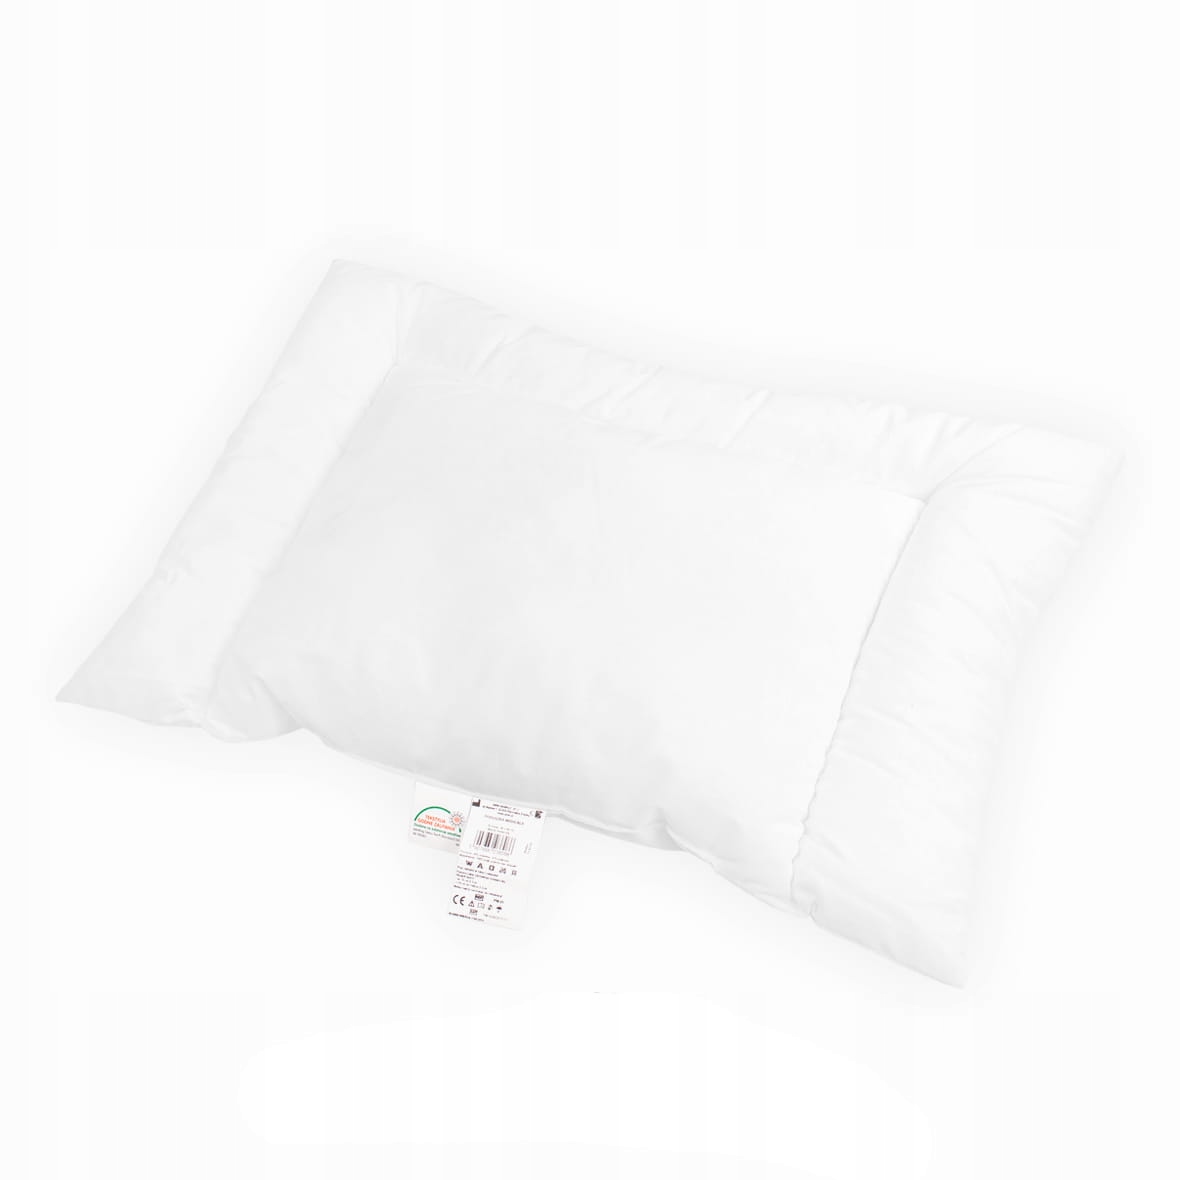 Одеяло подушка 100x135 тонкий летний легкий мягкий вес продукта с упаковкой 0,8 кг